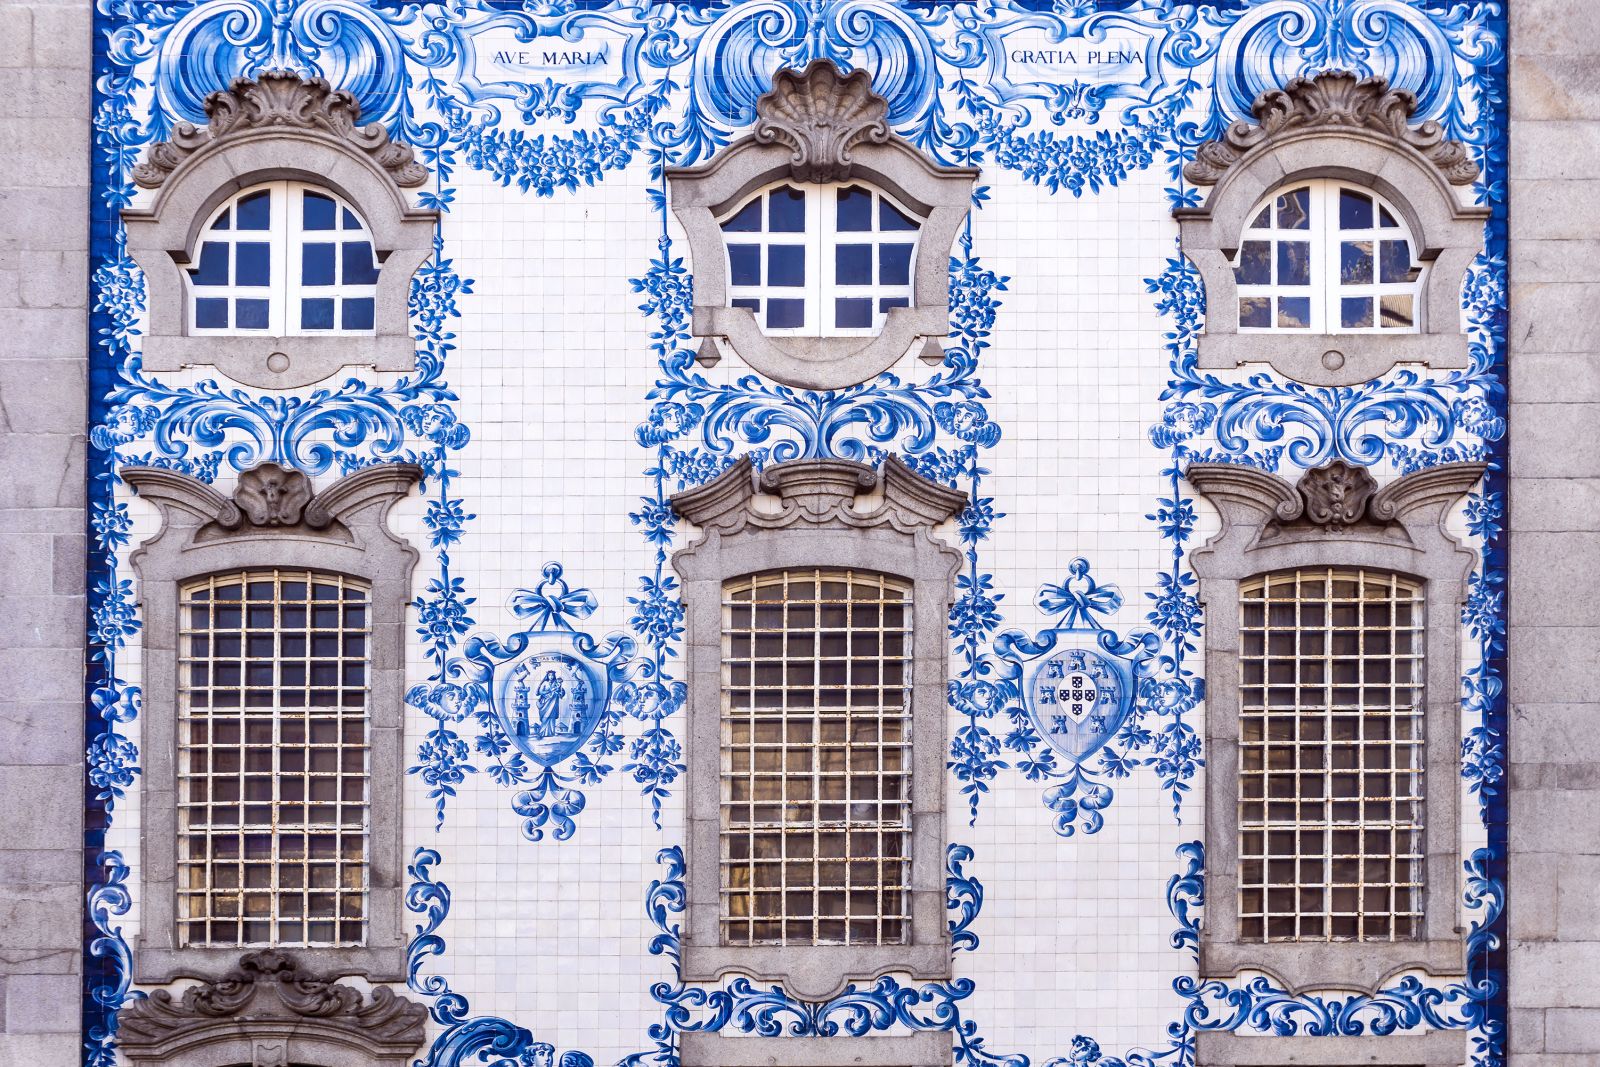 Facade of an historic building in Porto with azulejo tiles